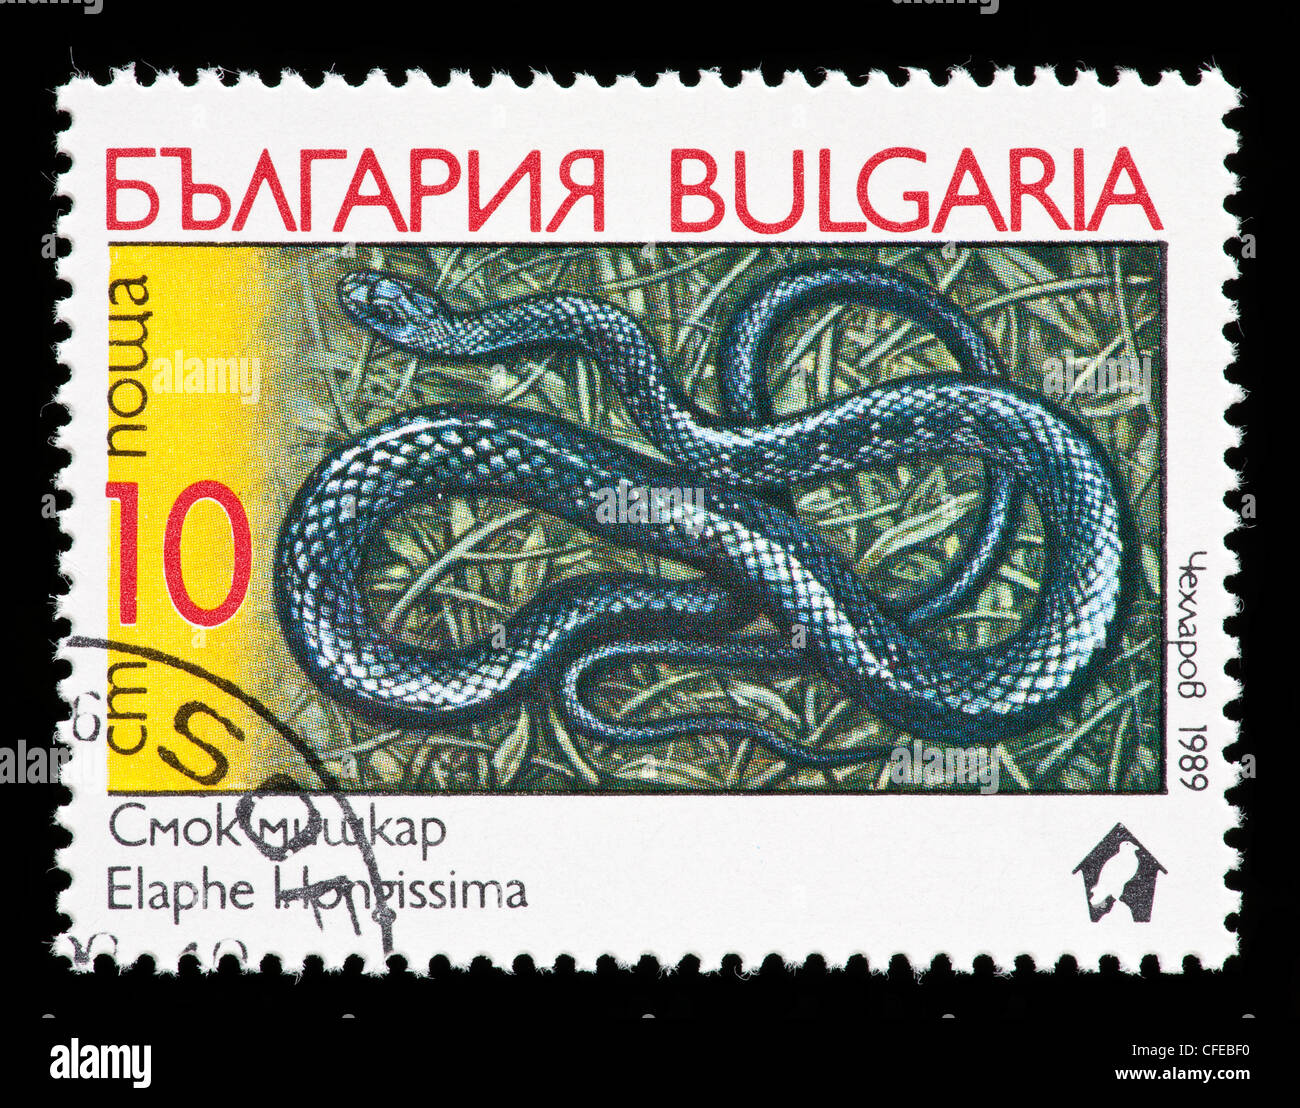 Postage stamp from Bulgaria depicting an Aesculapian snake (now Zamenis longissimus, previously Elaphe longissima) Stock Photo